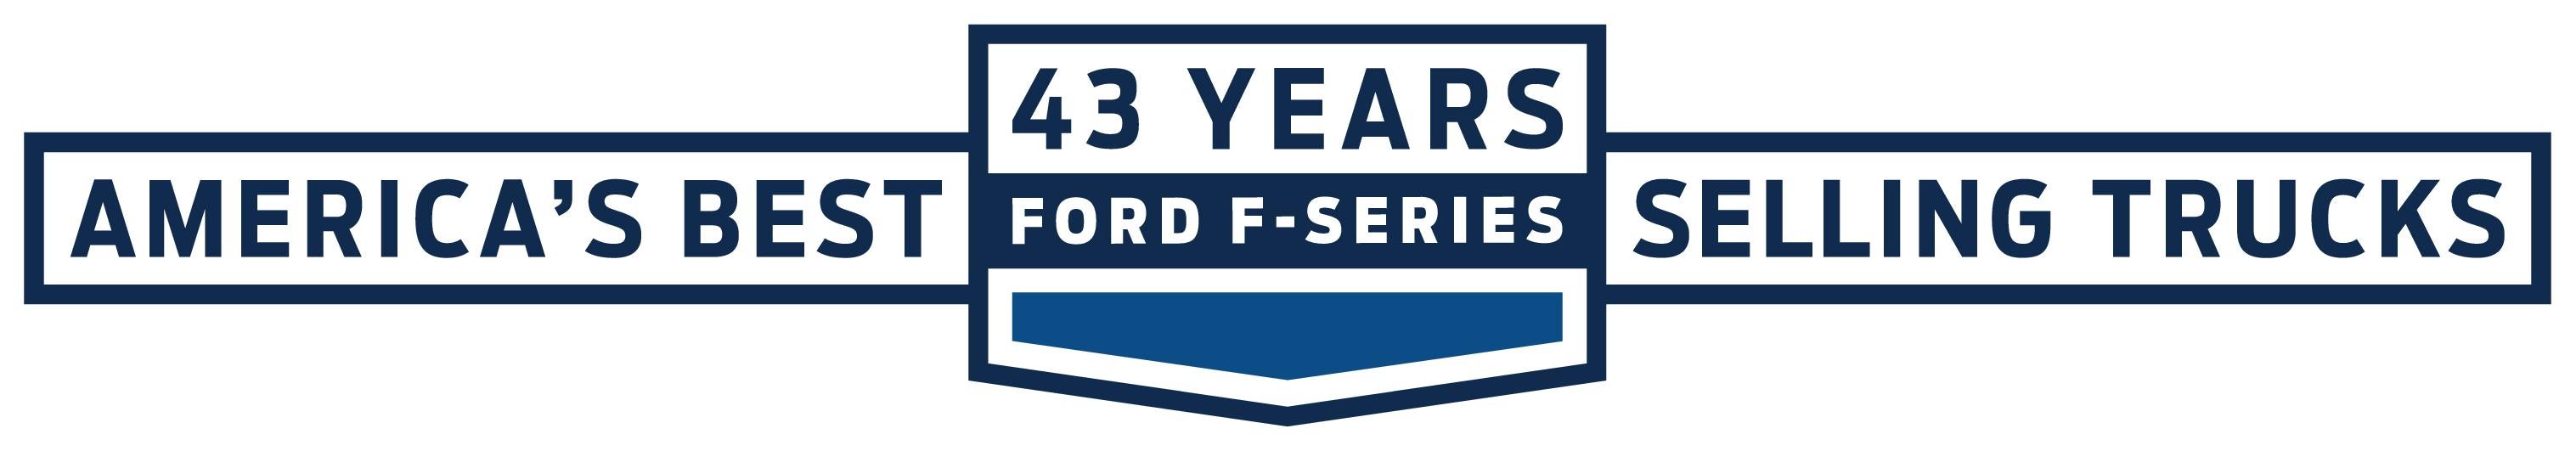 America's Best Selling Trucks. 43 Years Ford F-Series